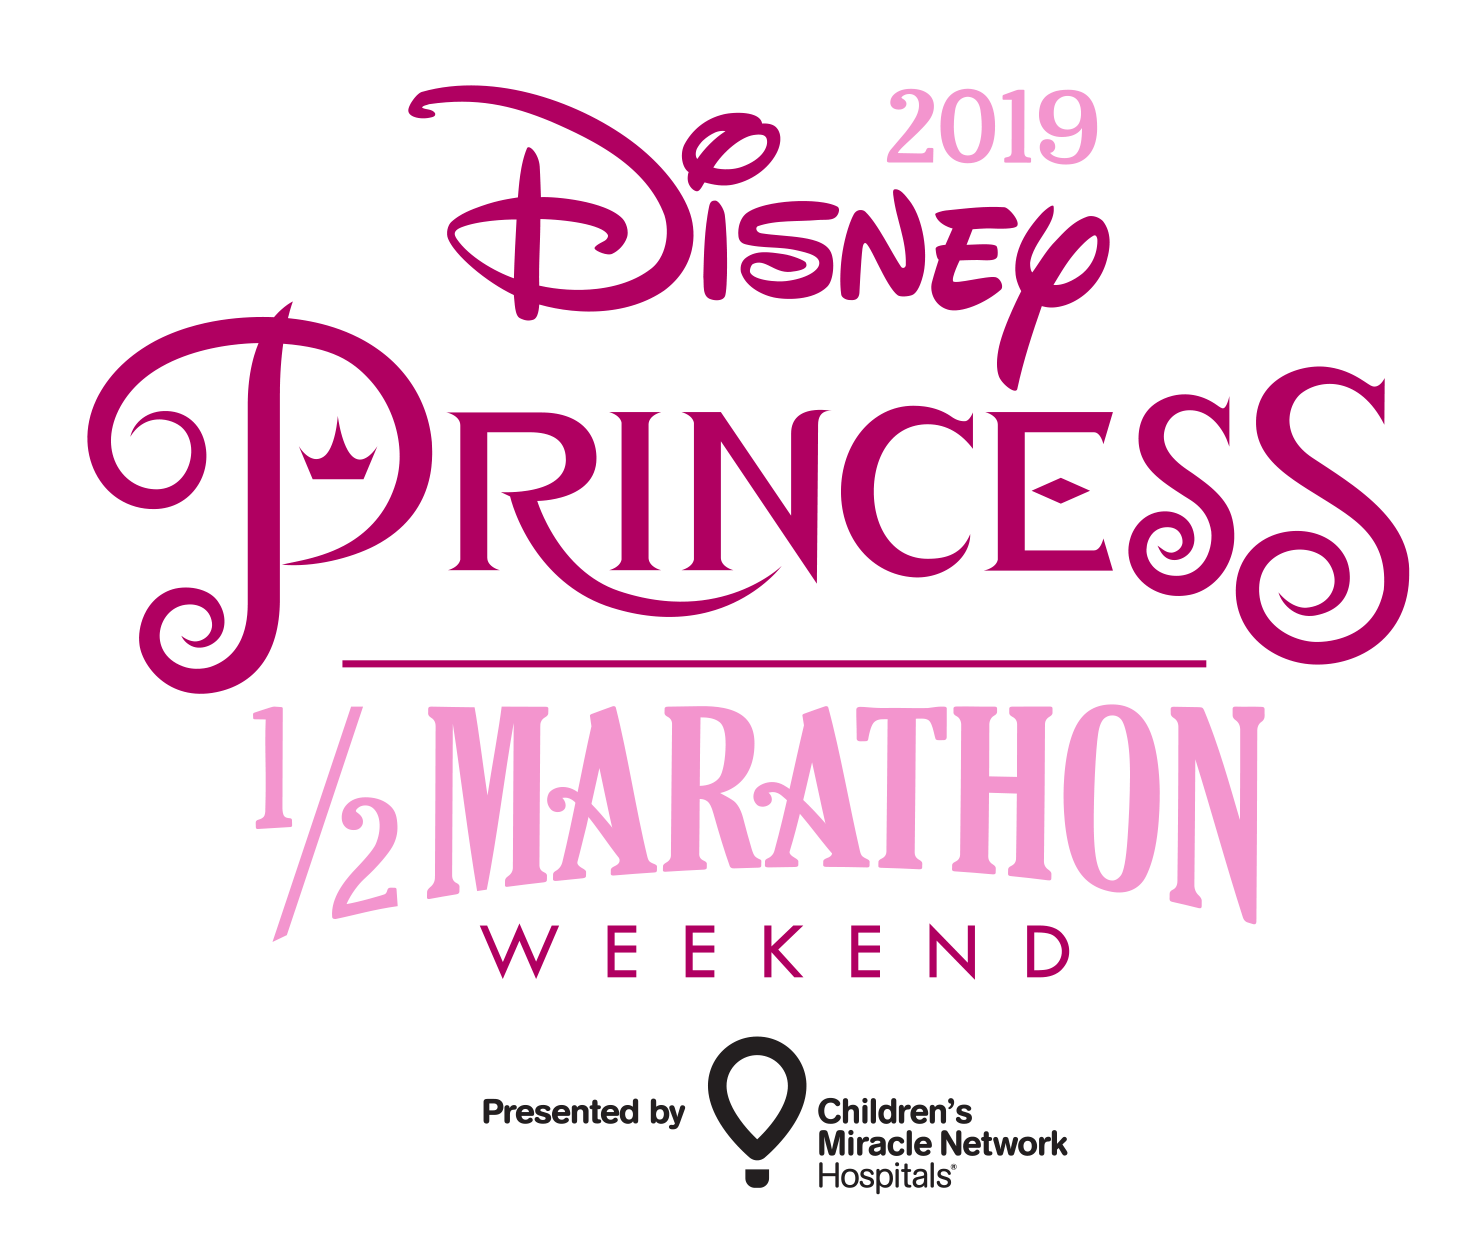 New Disney Princess Logo - Wish Upon a Star. Disney Princess Half Marathon Weekend. Wish Upon